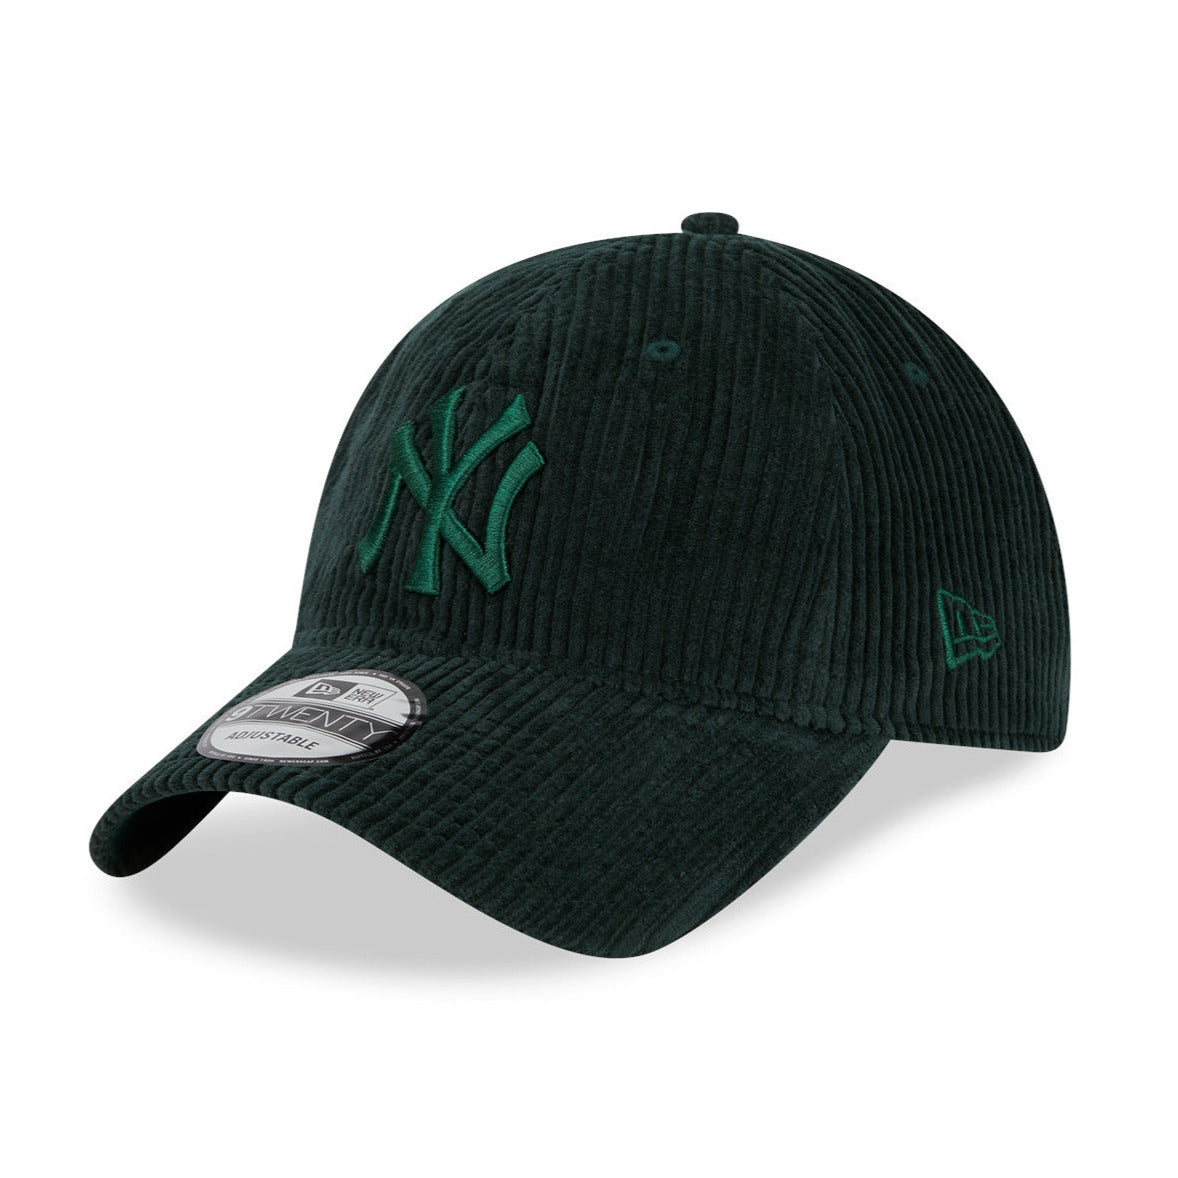 NEW ERA 39THIRTY BASEBALL CAP.NEW YORK YANKEES GREEN STRETCH COTTON BLEND  HAT C0